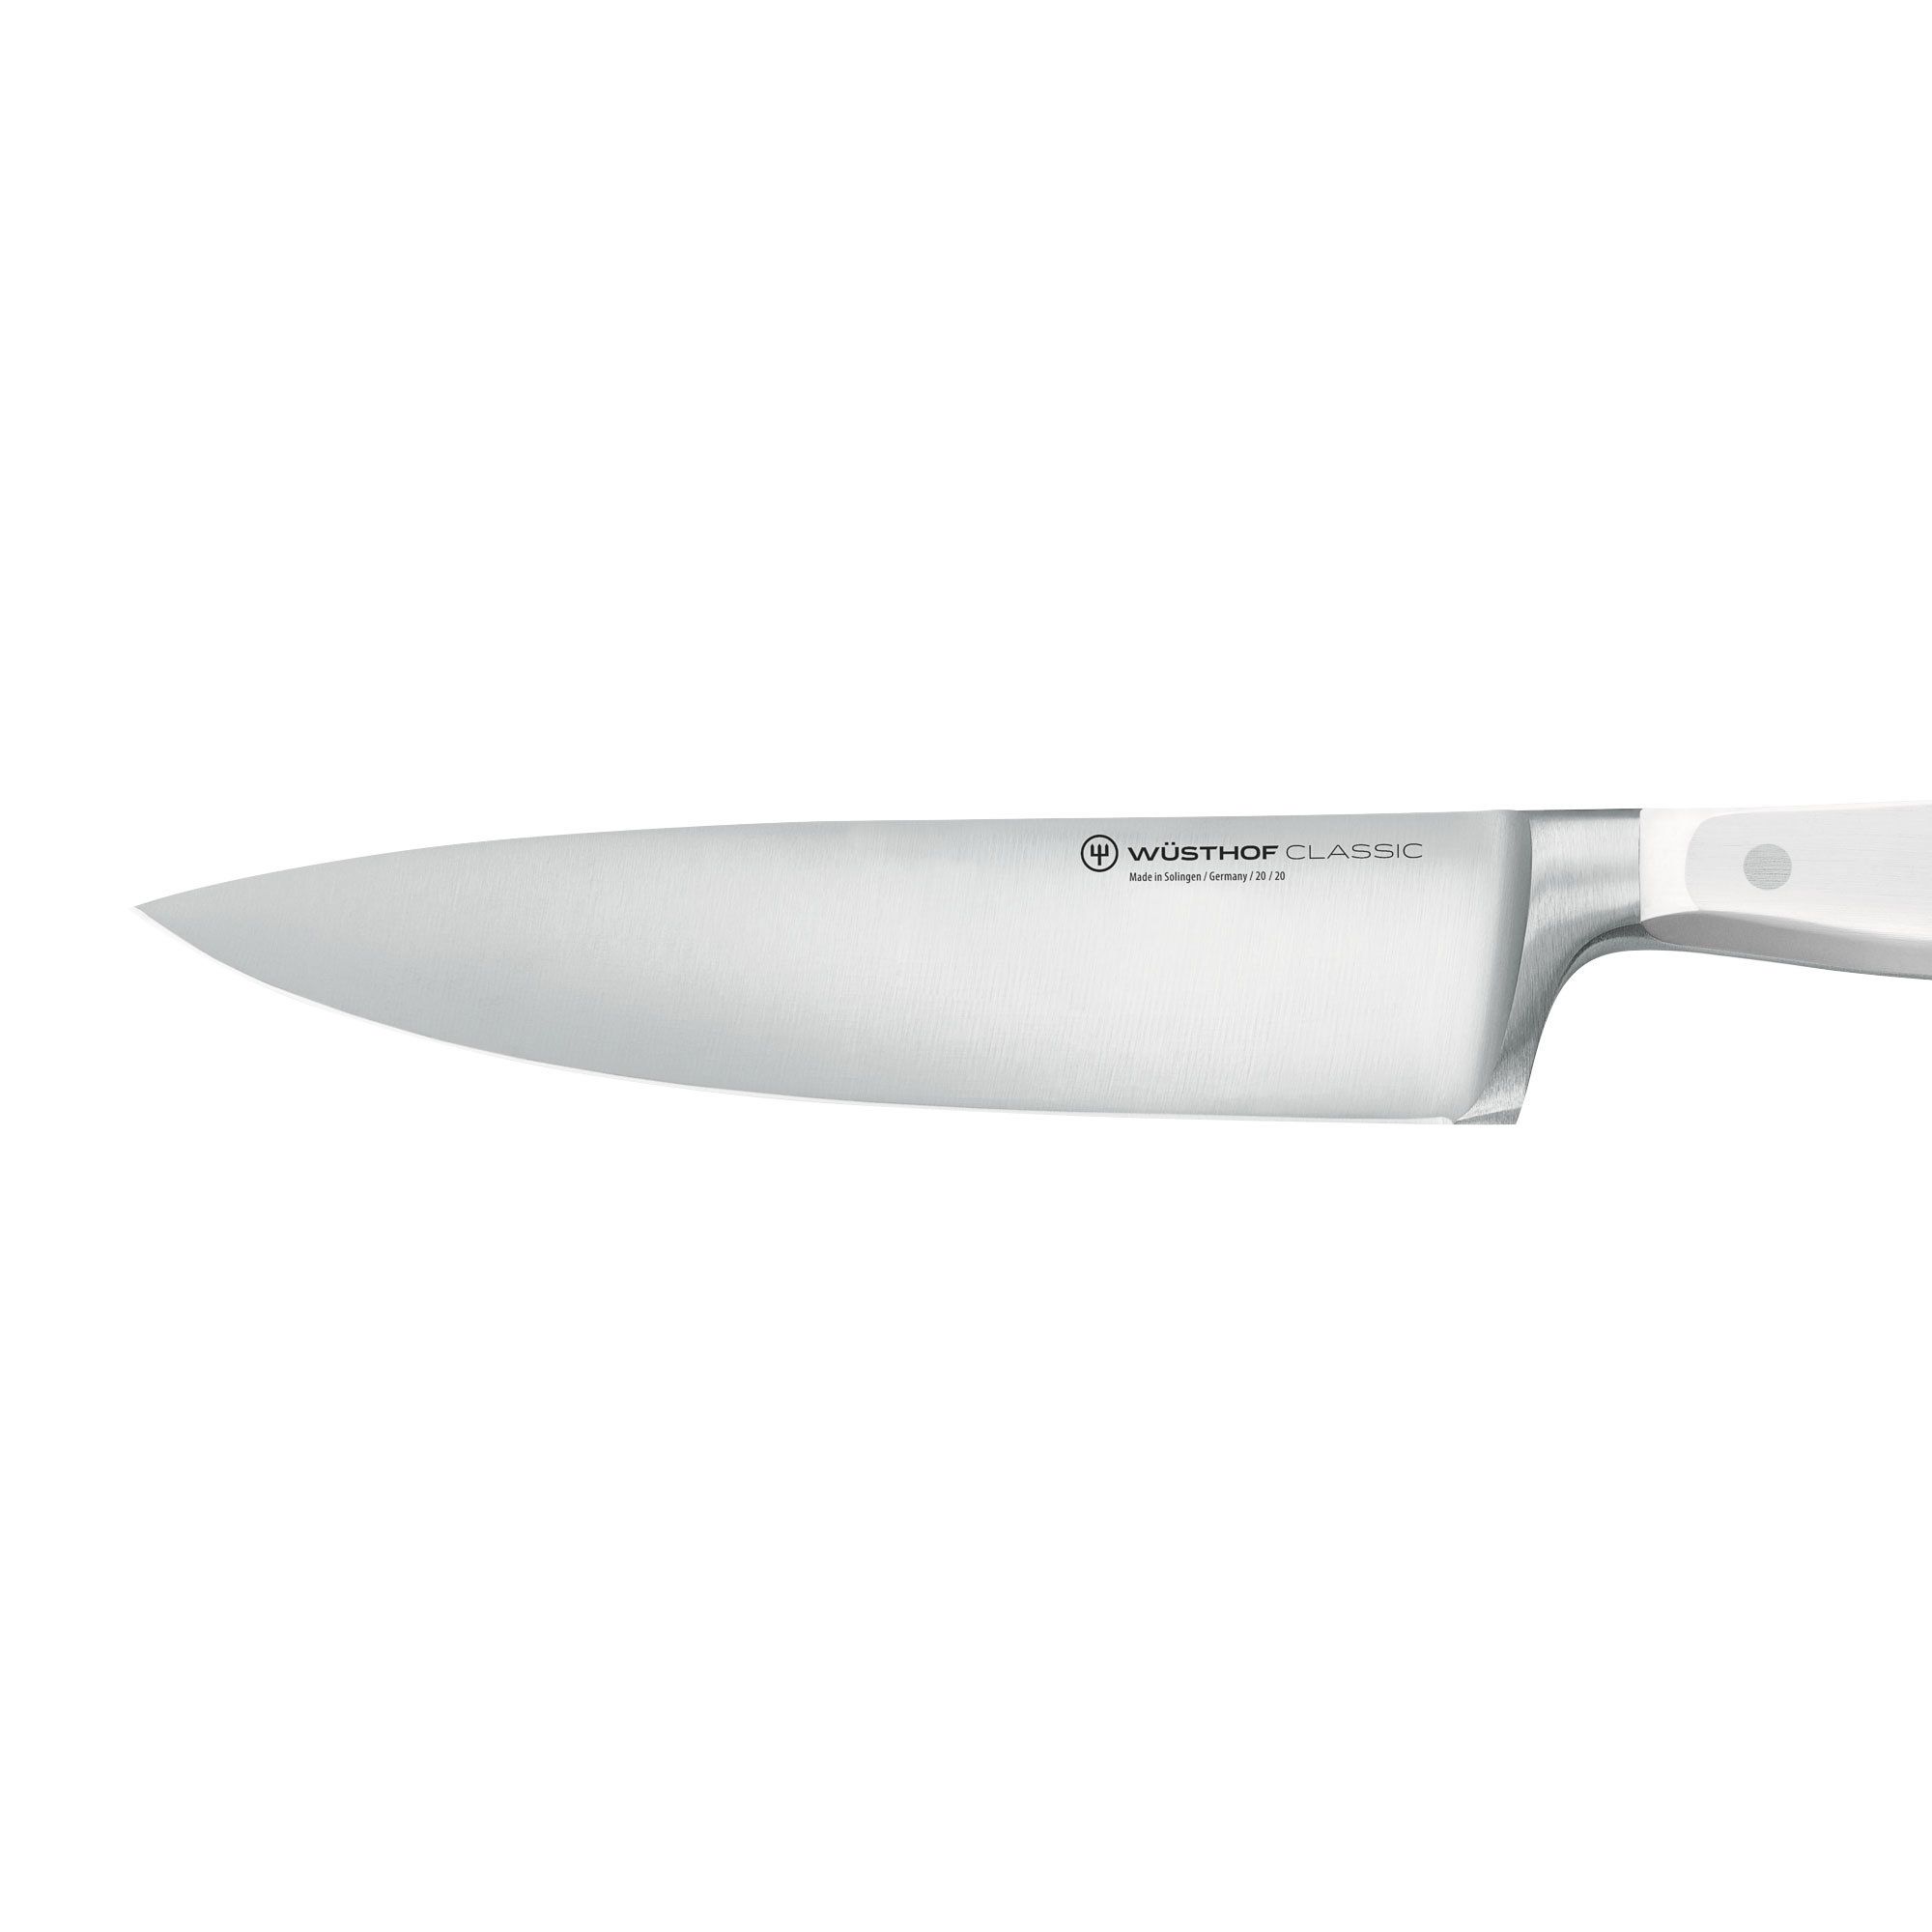 Wusthof Classic White Cook's Knife 20cm Image 2